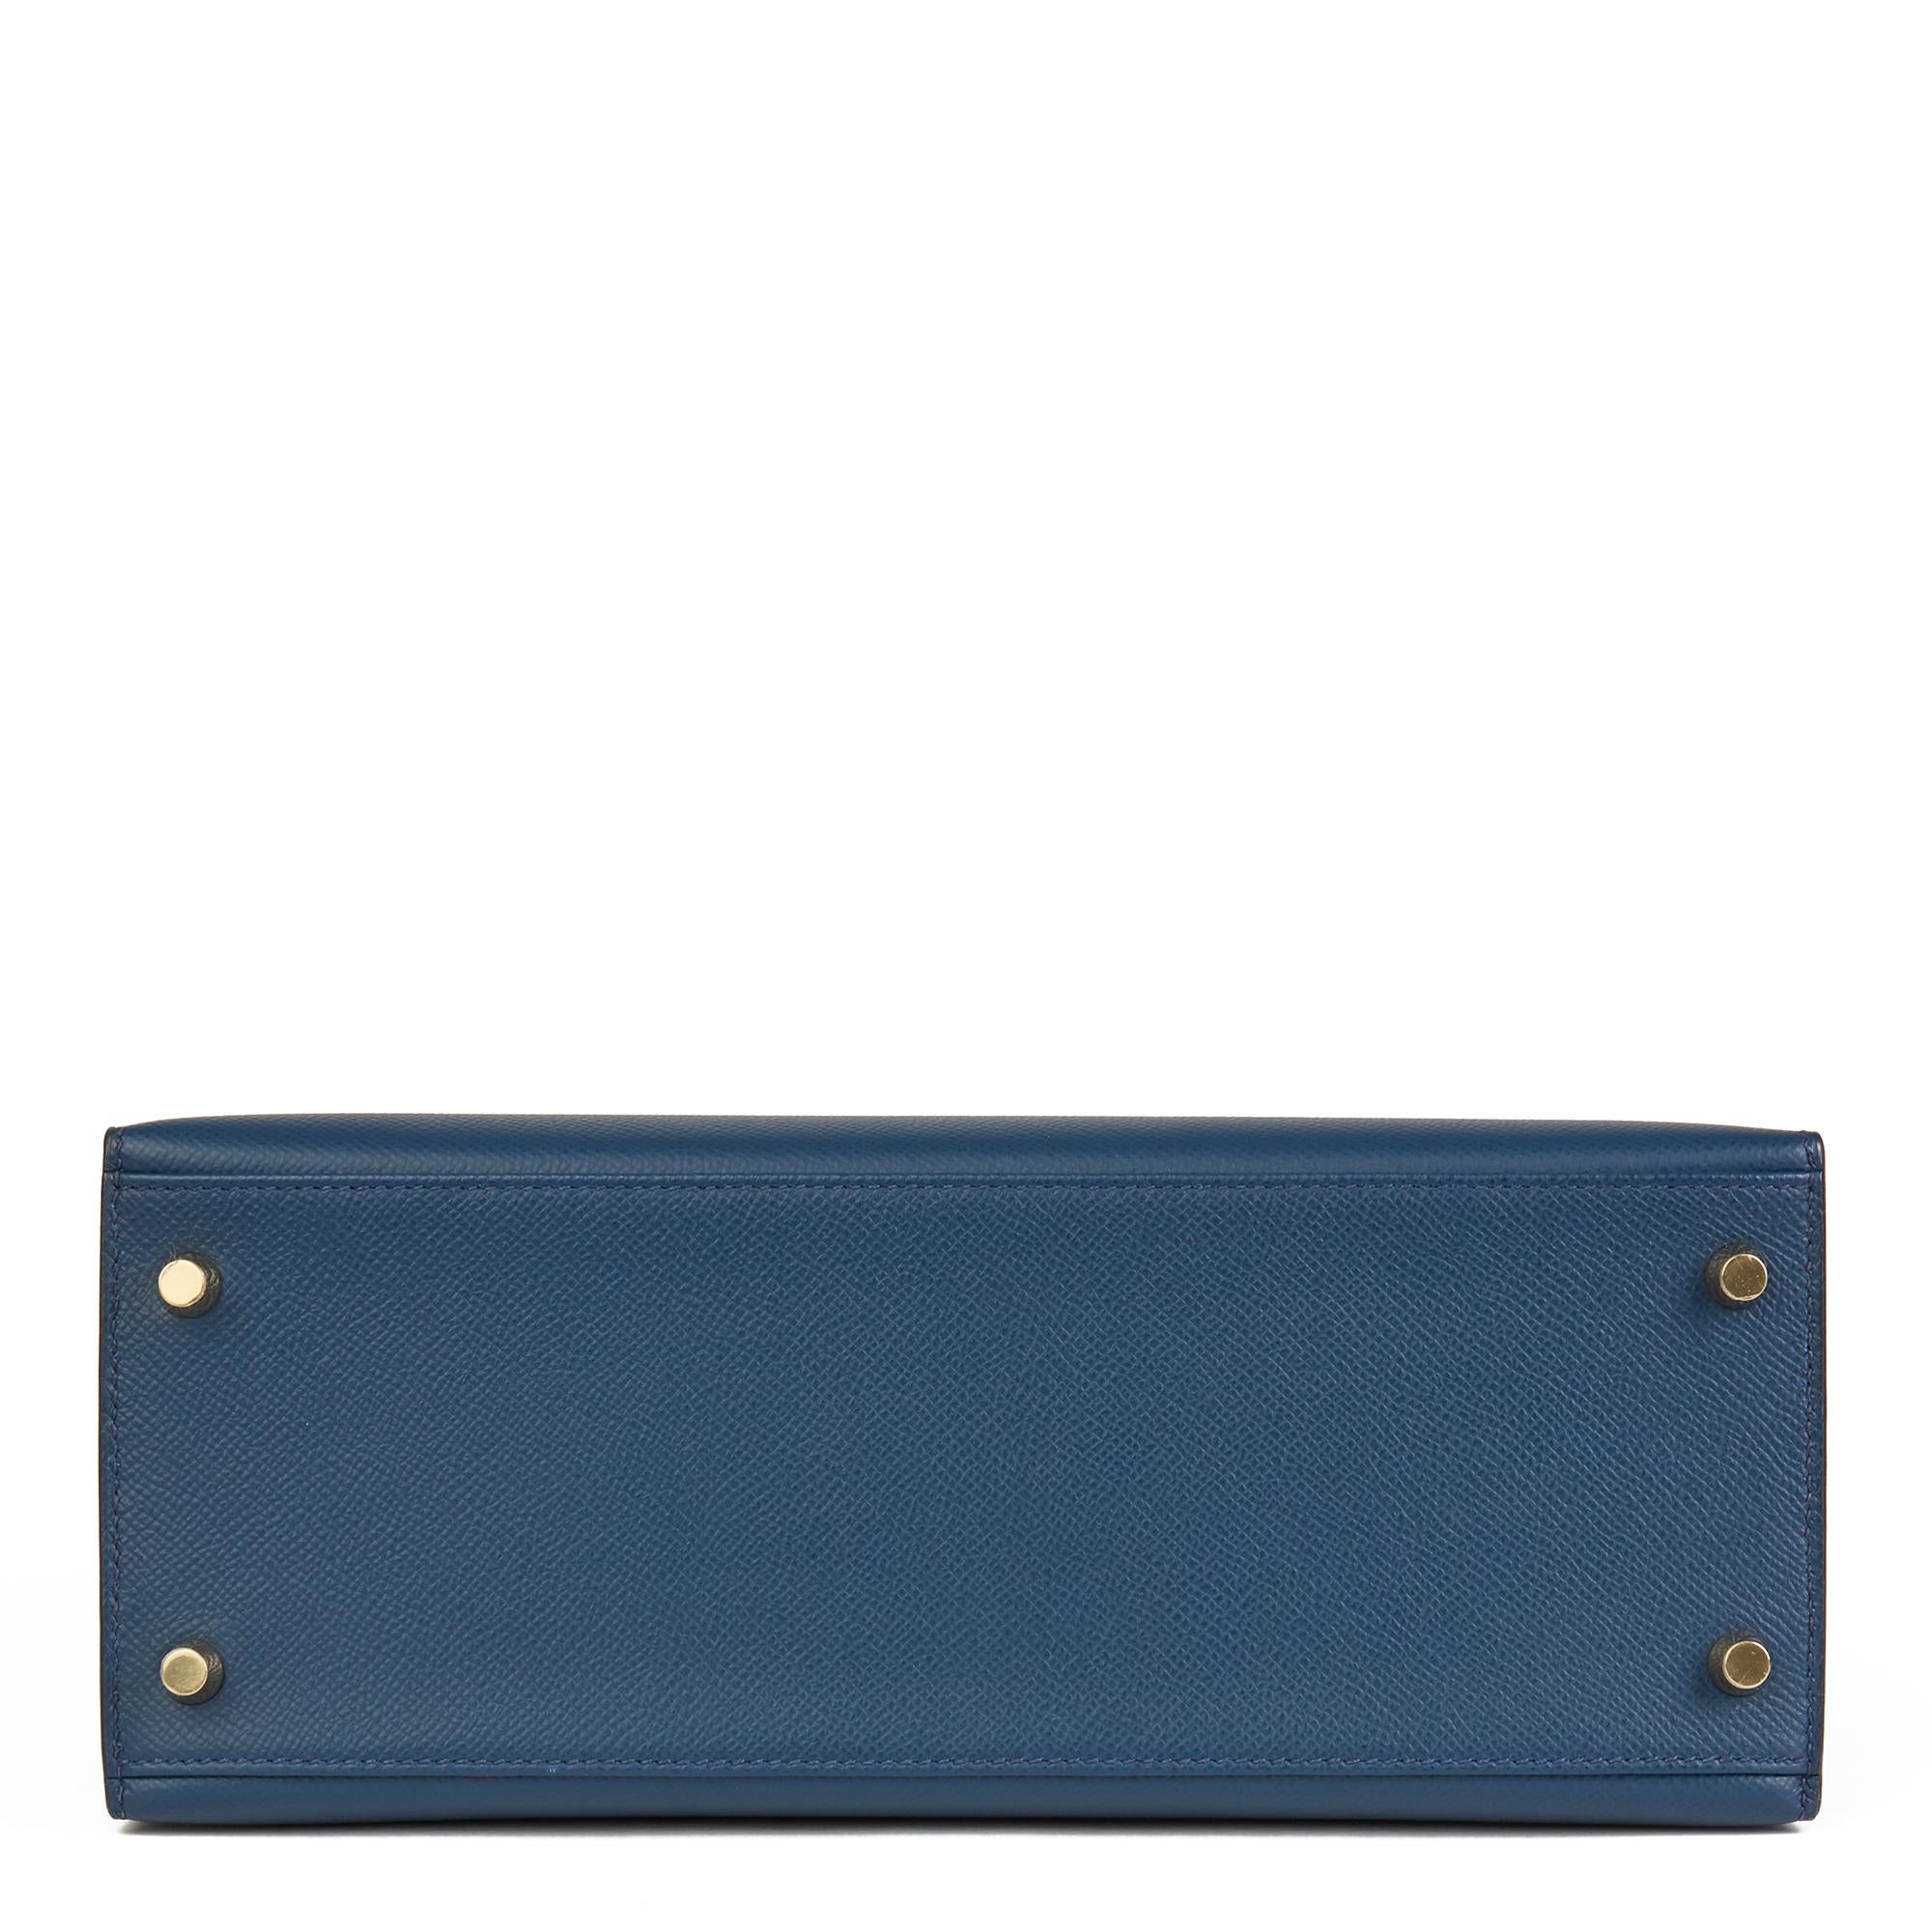 Blue 2019 Hermès Bleu de Malte Epsom Leather Kelly 28cm